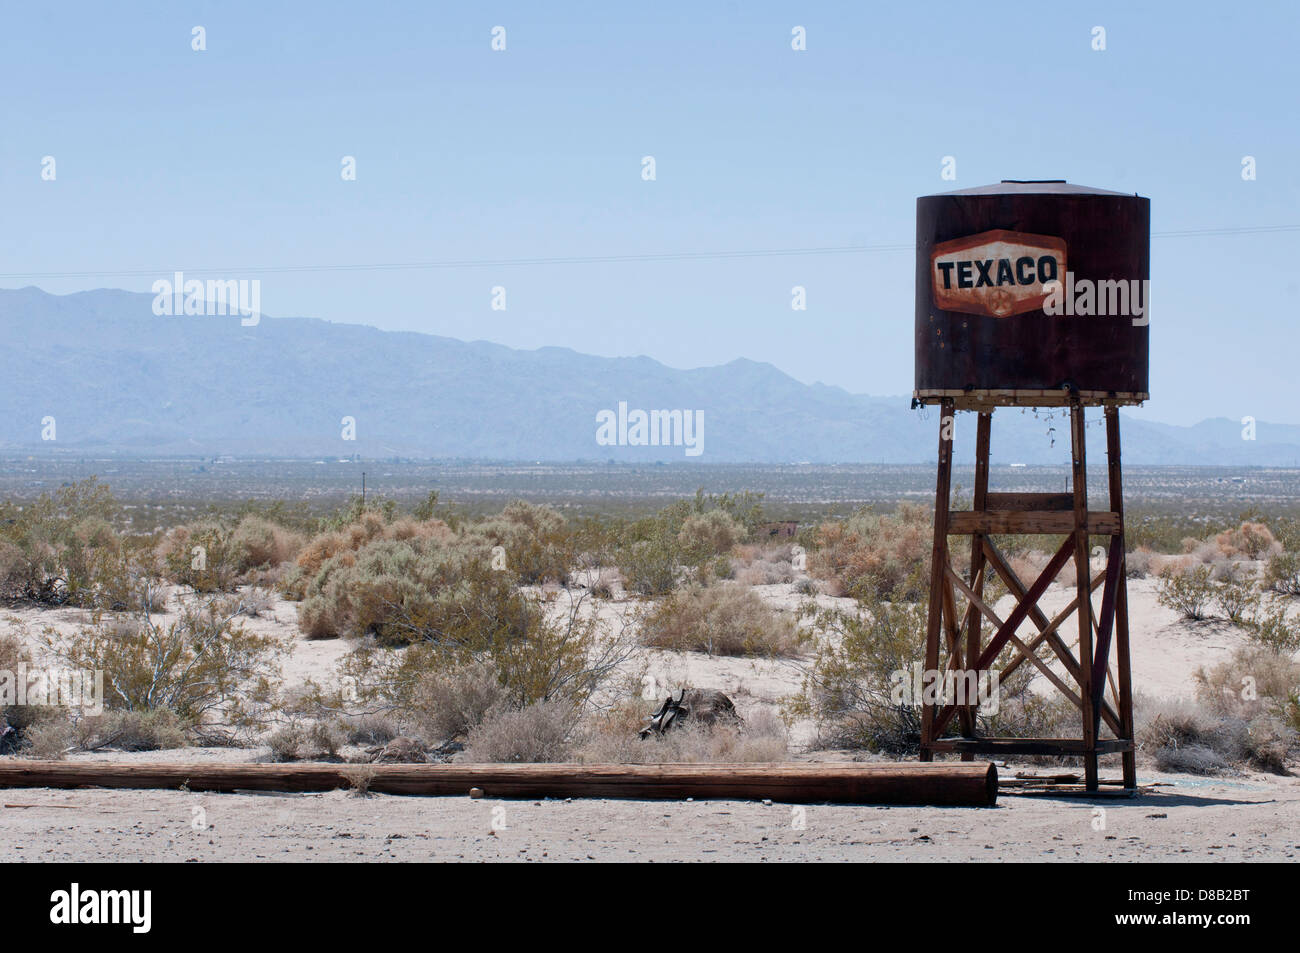 On the road in the Mojave Desert, near Amboy, California, USA Stock Photo